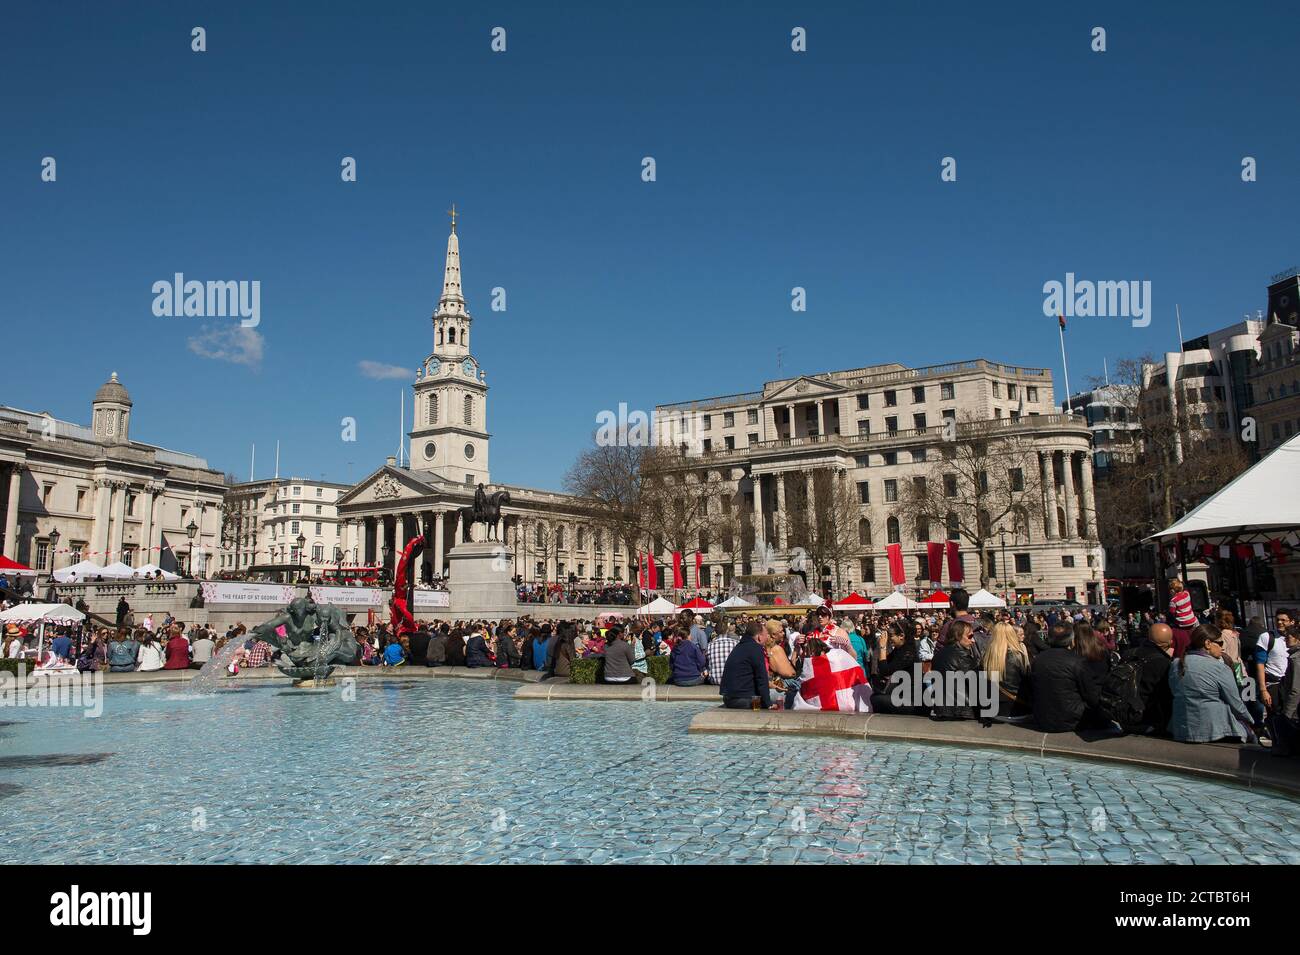 La gente asiste a la fiesta anual de San Jorge en Trafalgar Square, Londres, Inglaterra. Foto de stock